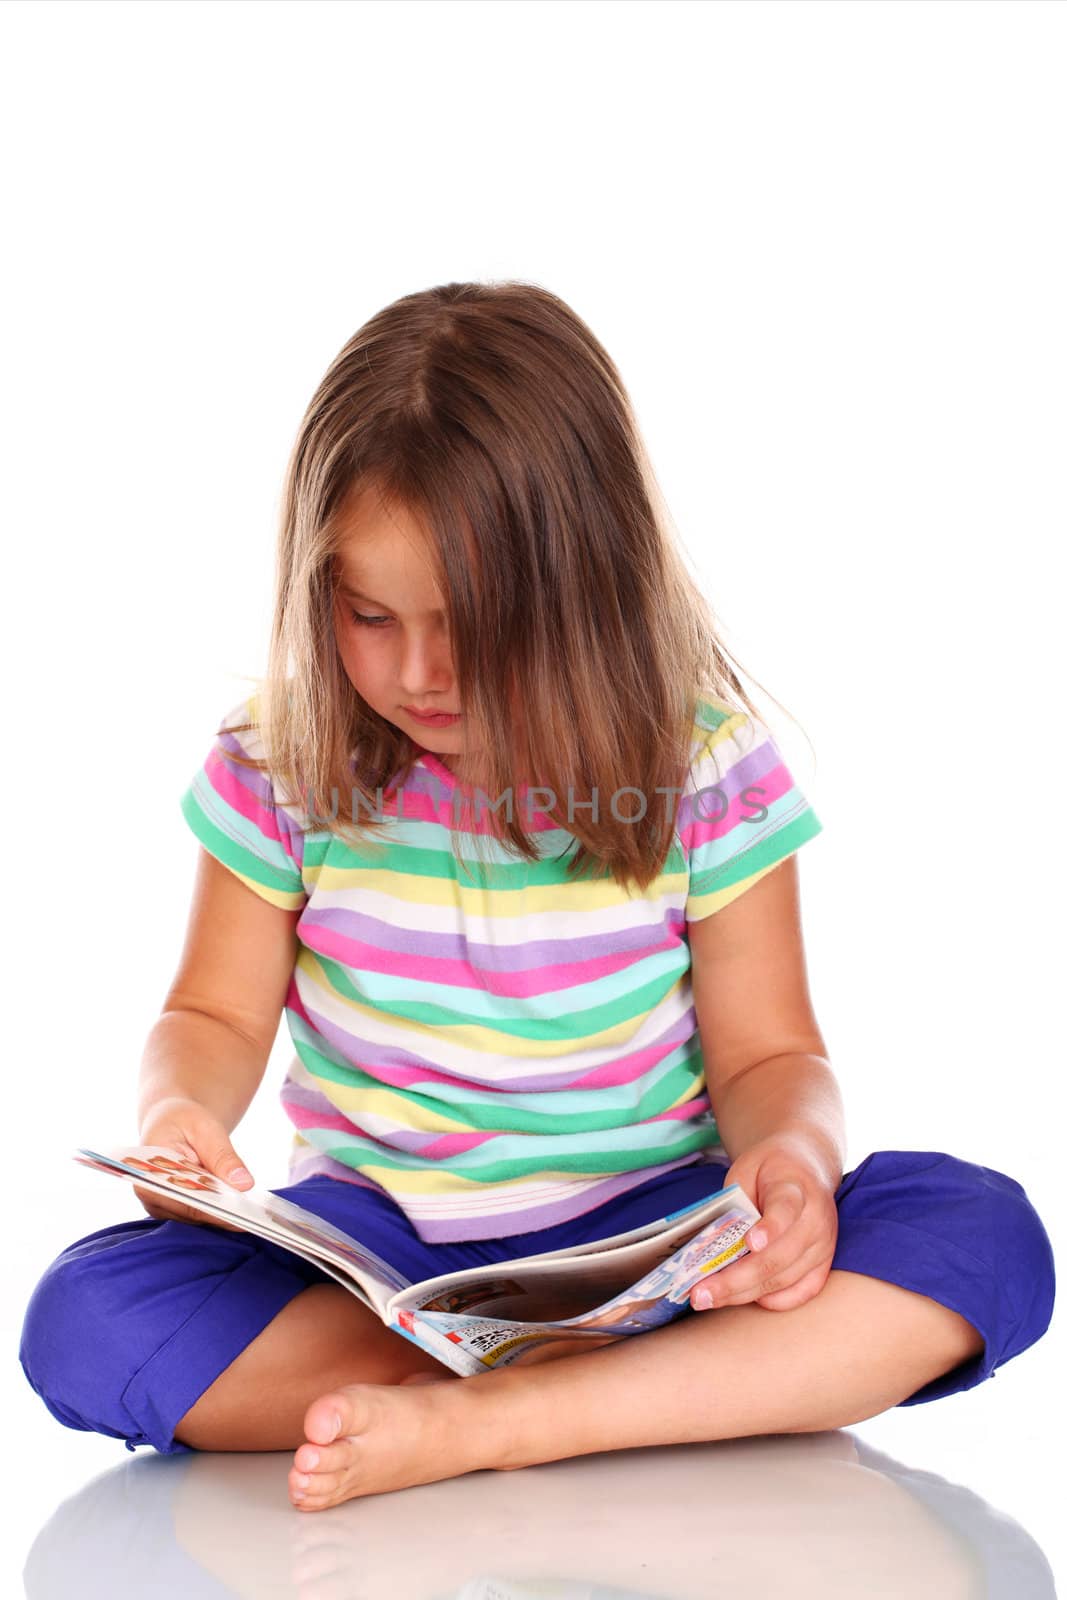 Cute little girl reading book by rufatjumali